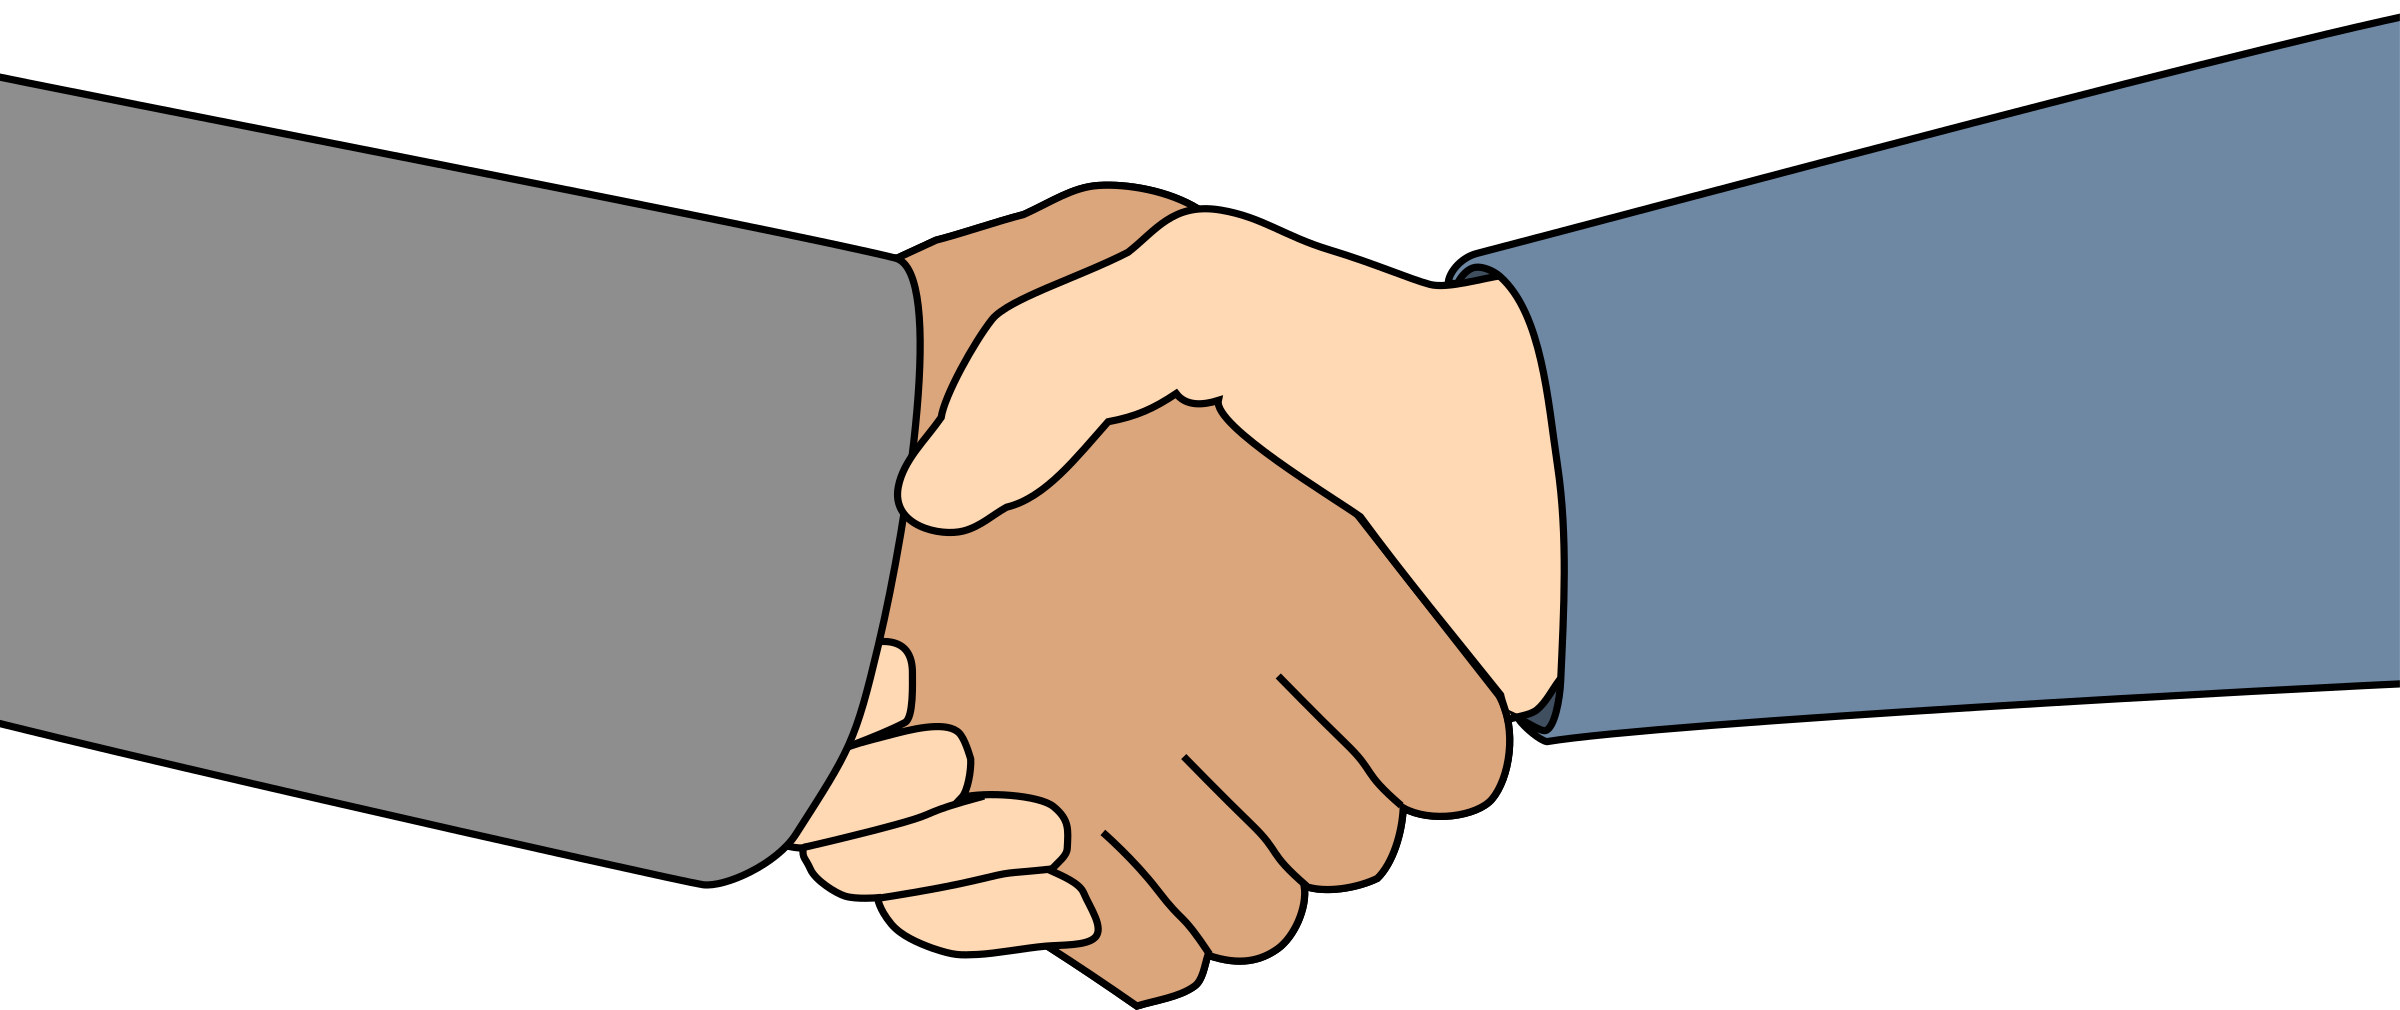 Cartoon Handshakes | Free download on ClipArtMag